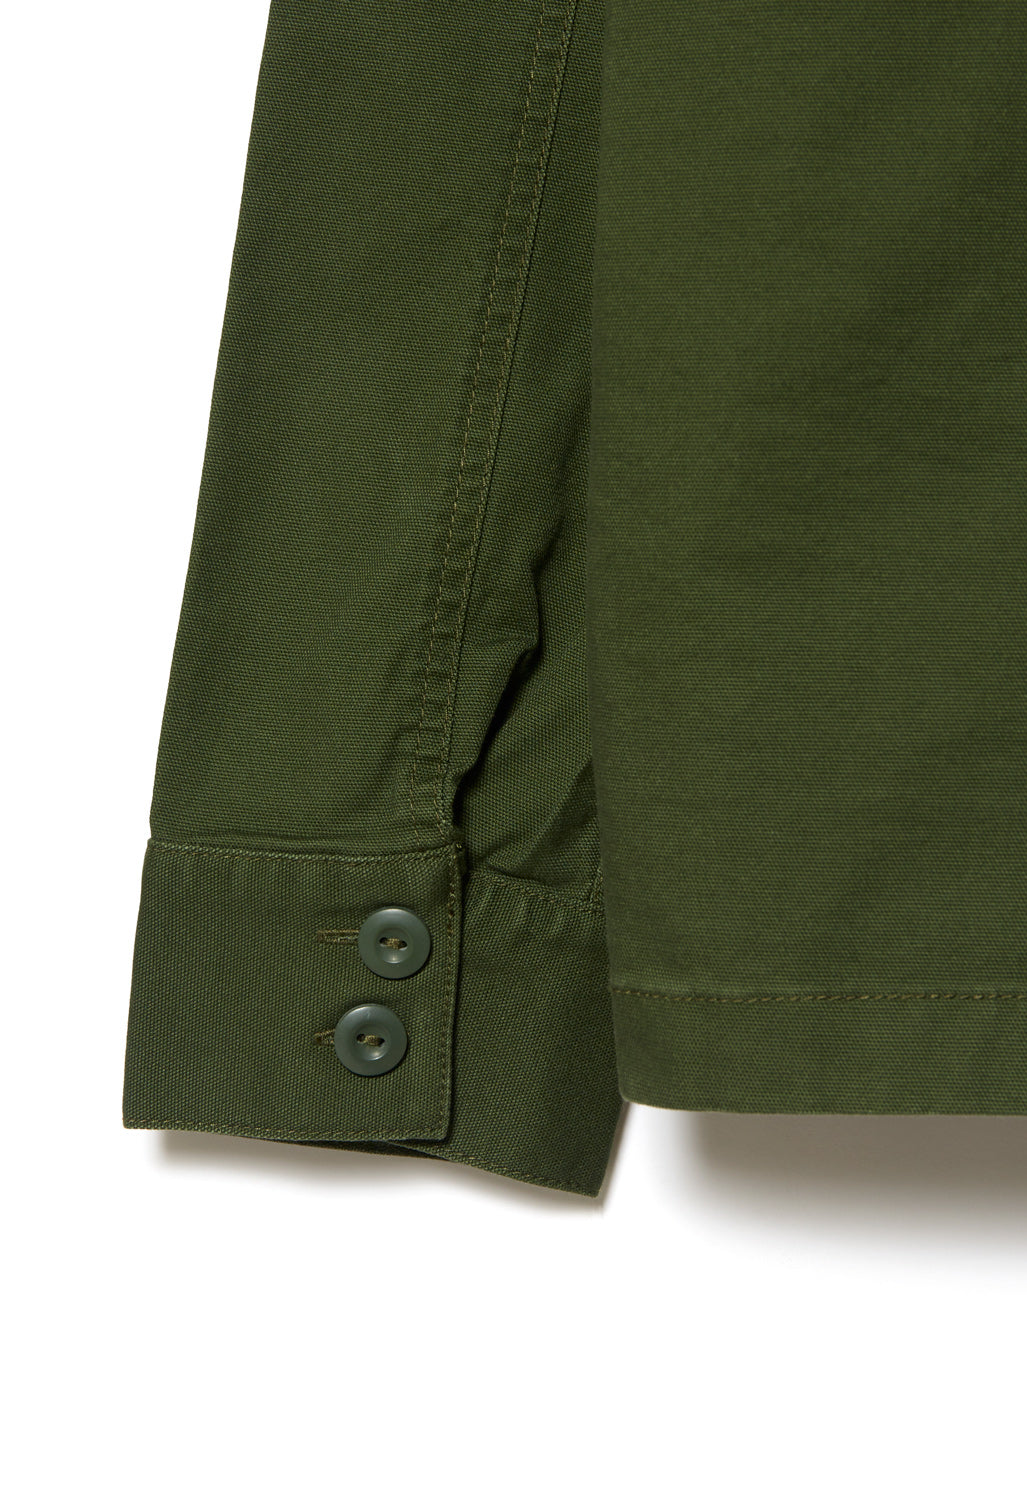 Topo Designs Men's Dirt Jacket - Olive